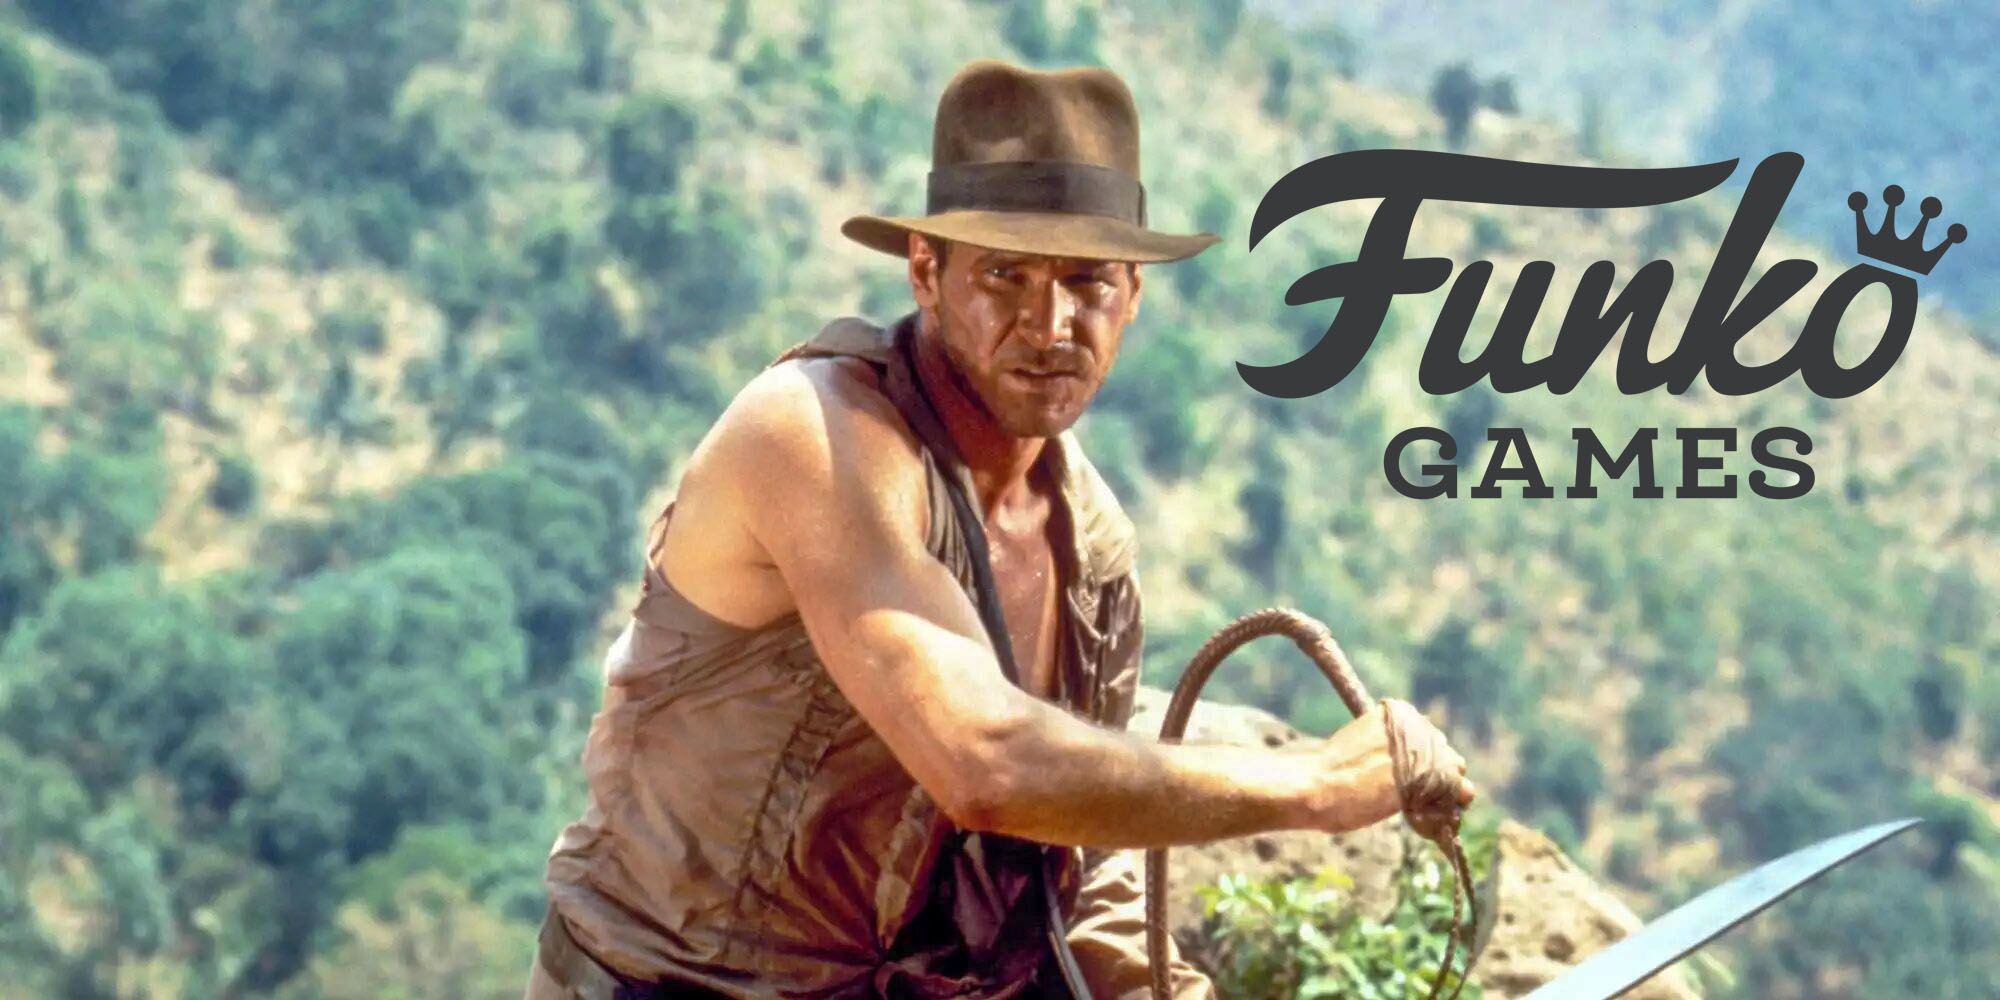 Funko Reveals Four New Indiana Jones Games